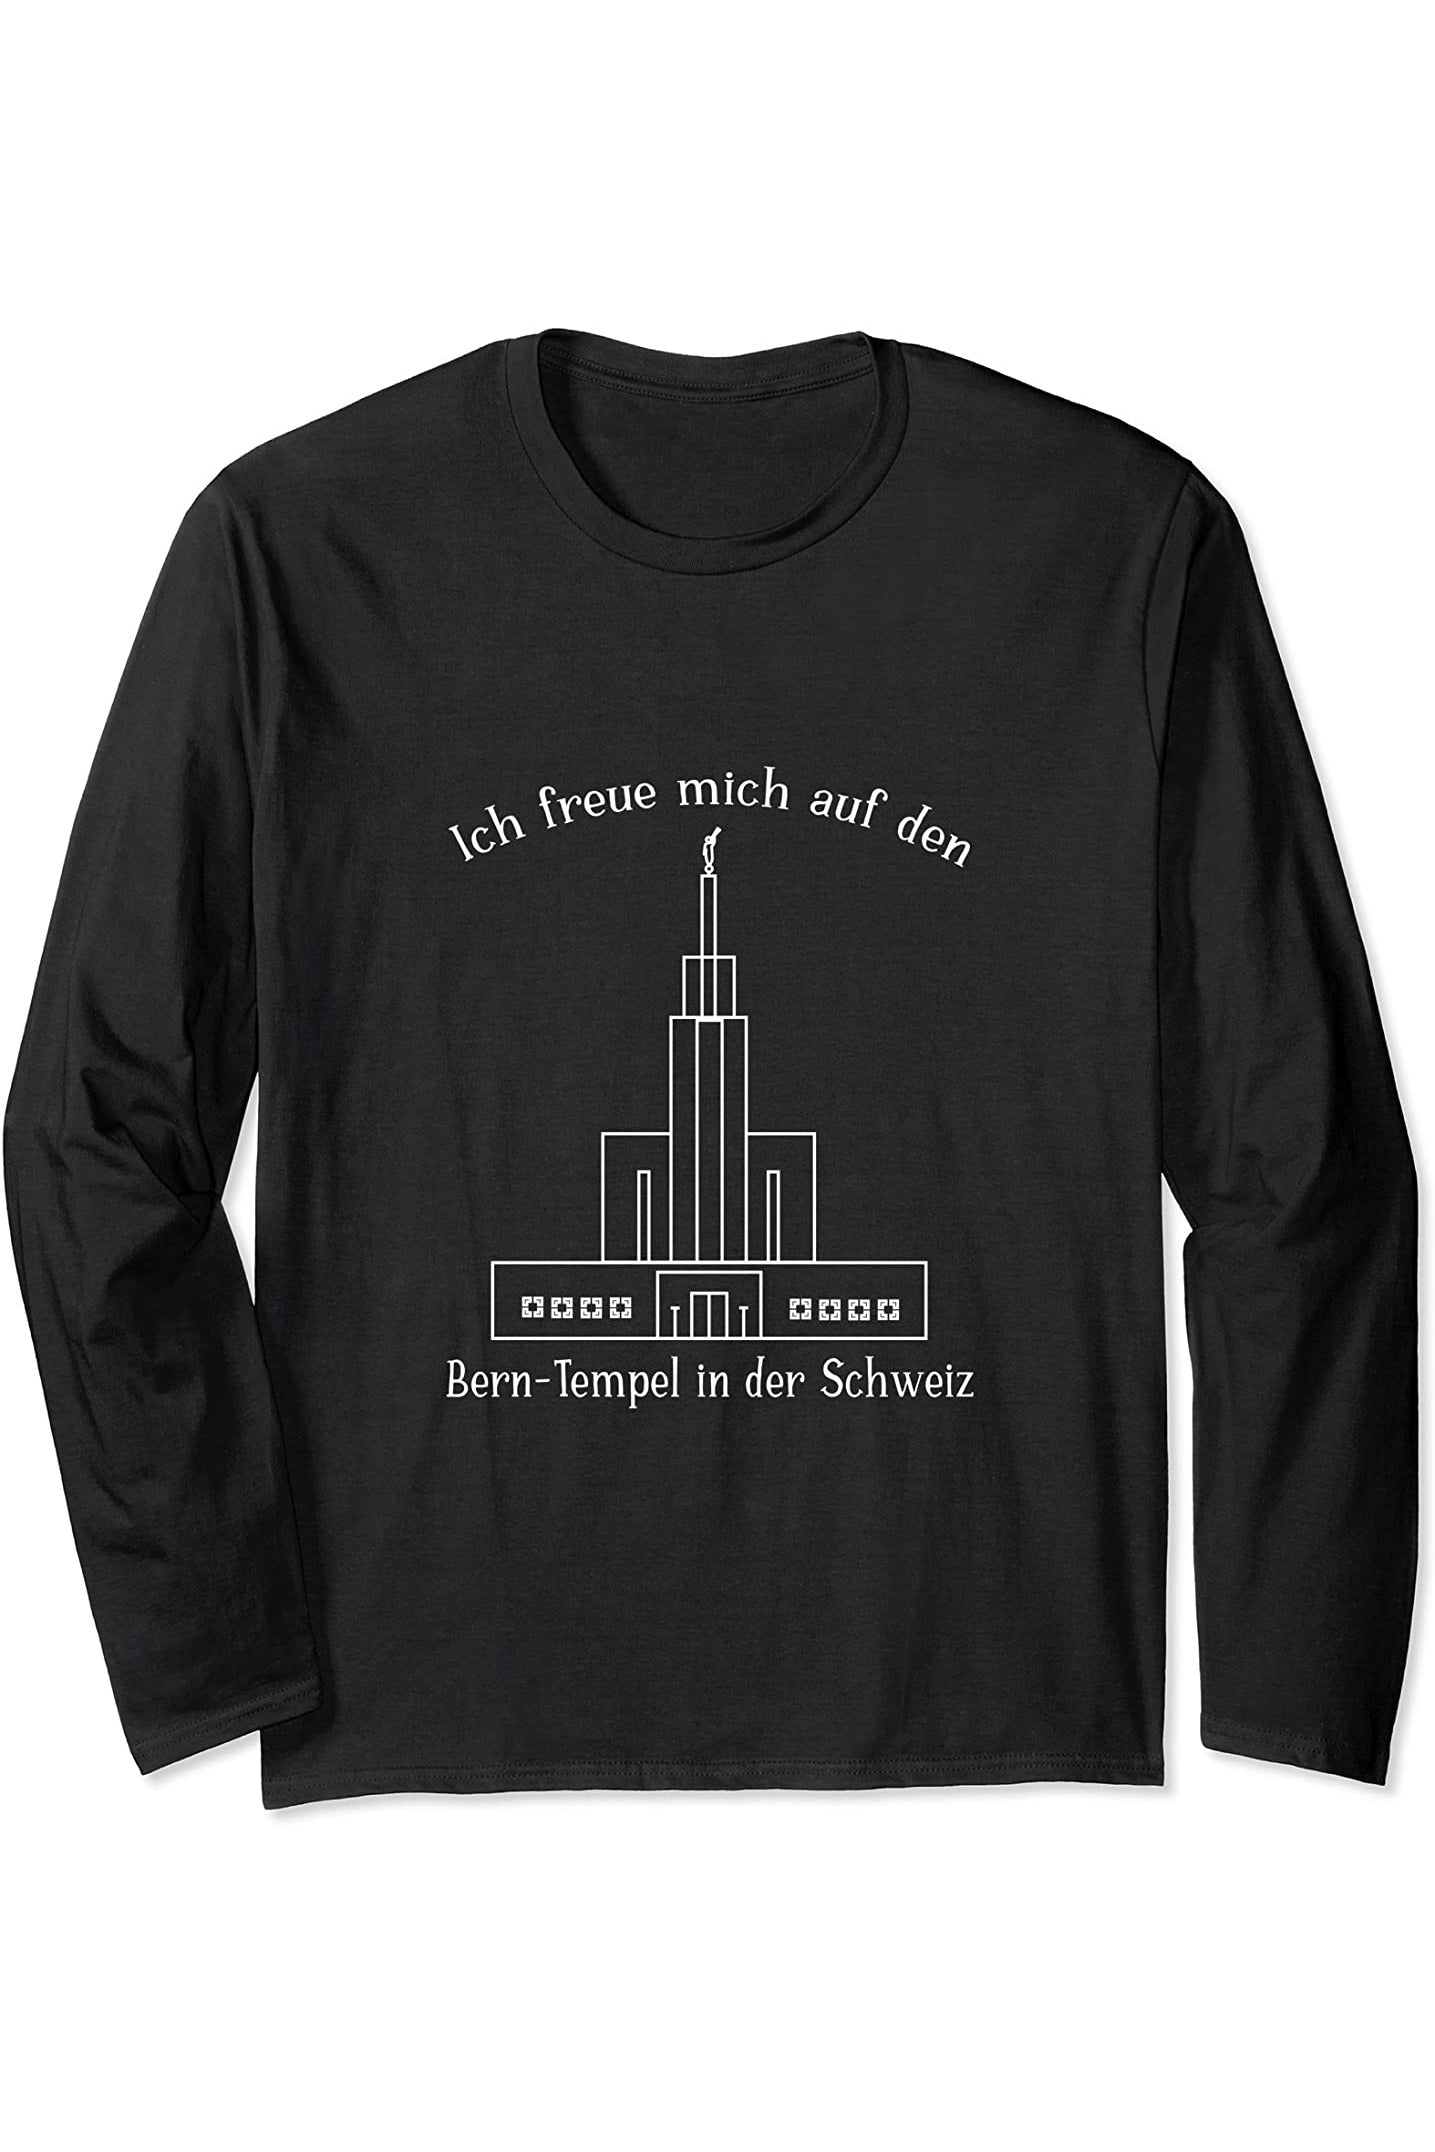 Bern Switzerland Temple Long Sleeve T-Shirt - Happy Style (German) US